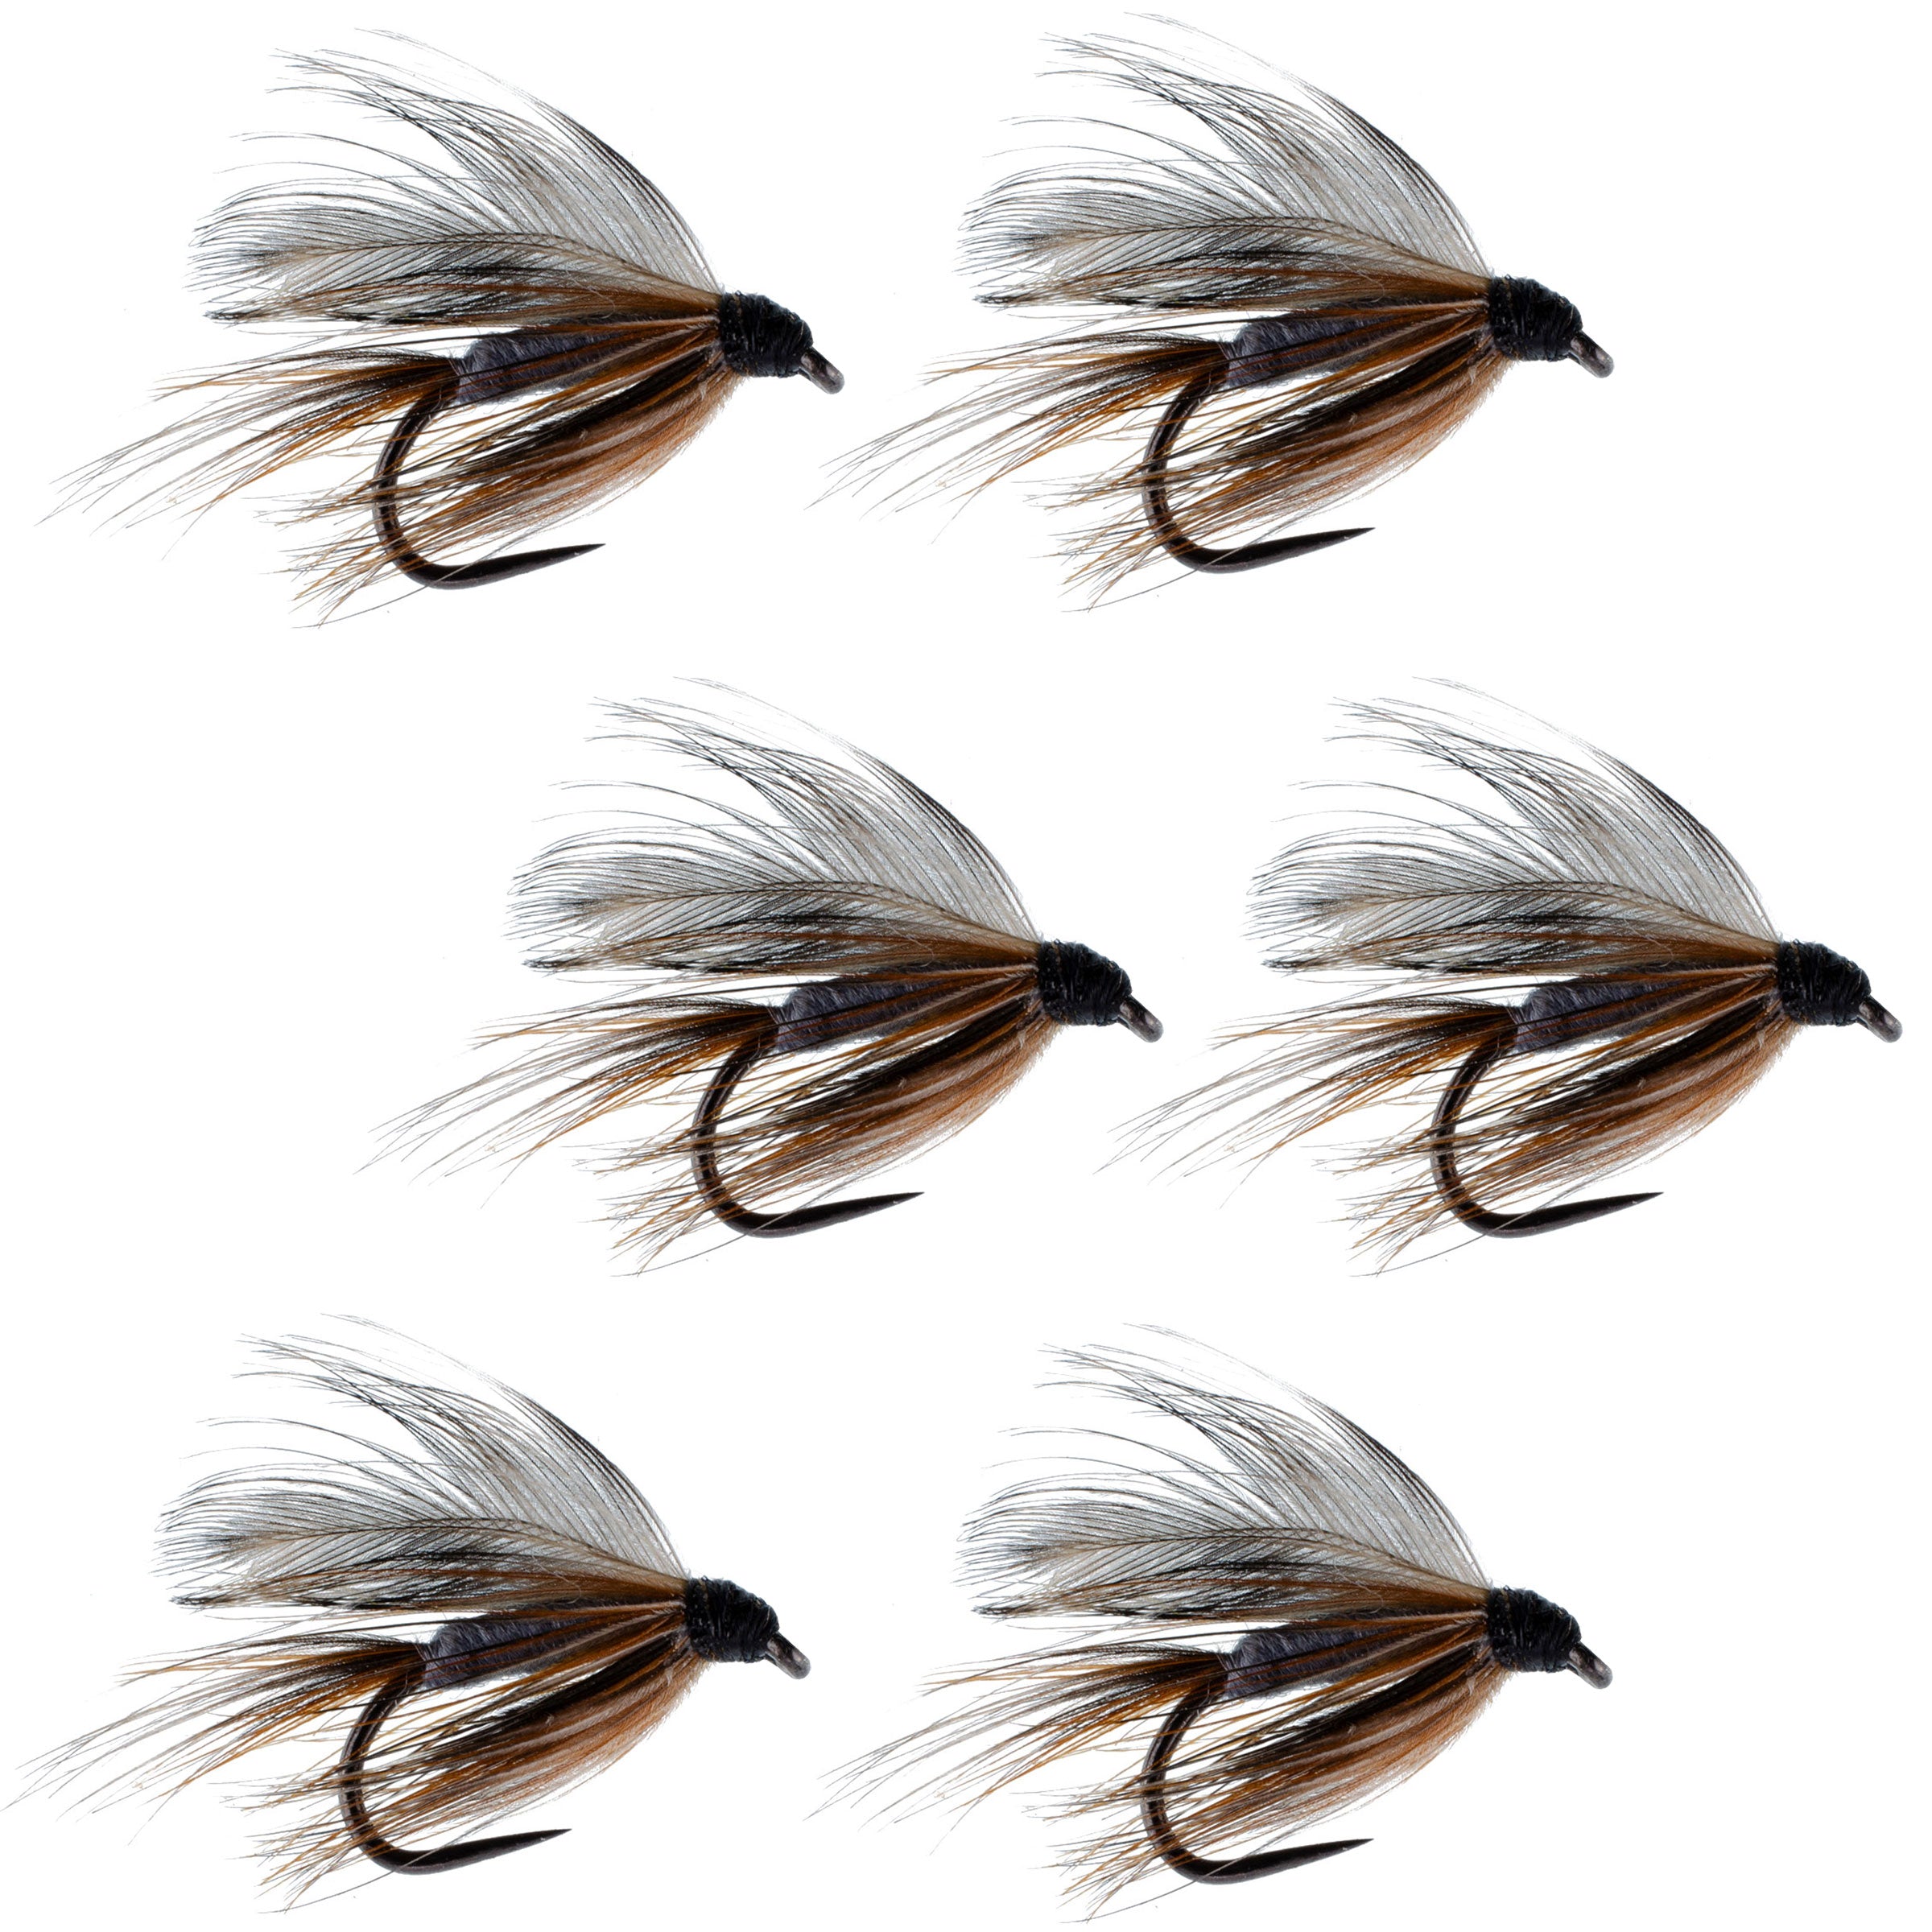 Barbless Adams Classic Wet Fly Fly Fishing Flies - 6 Flies Hook Size 14